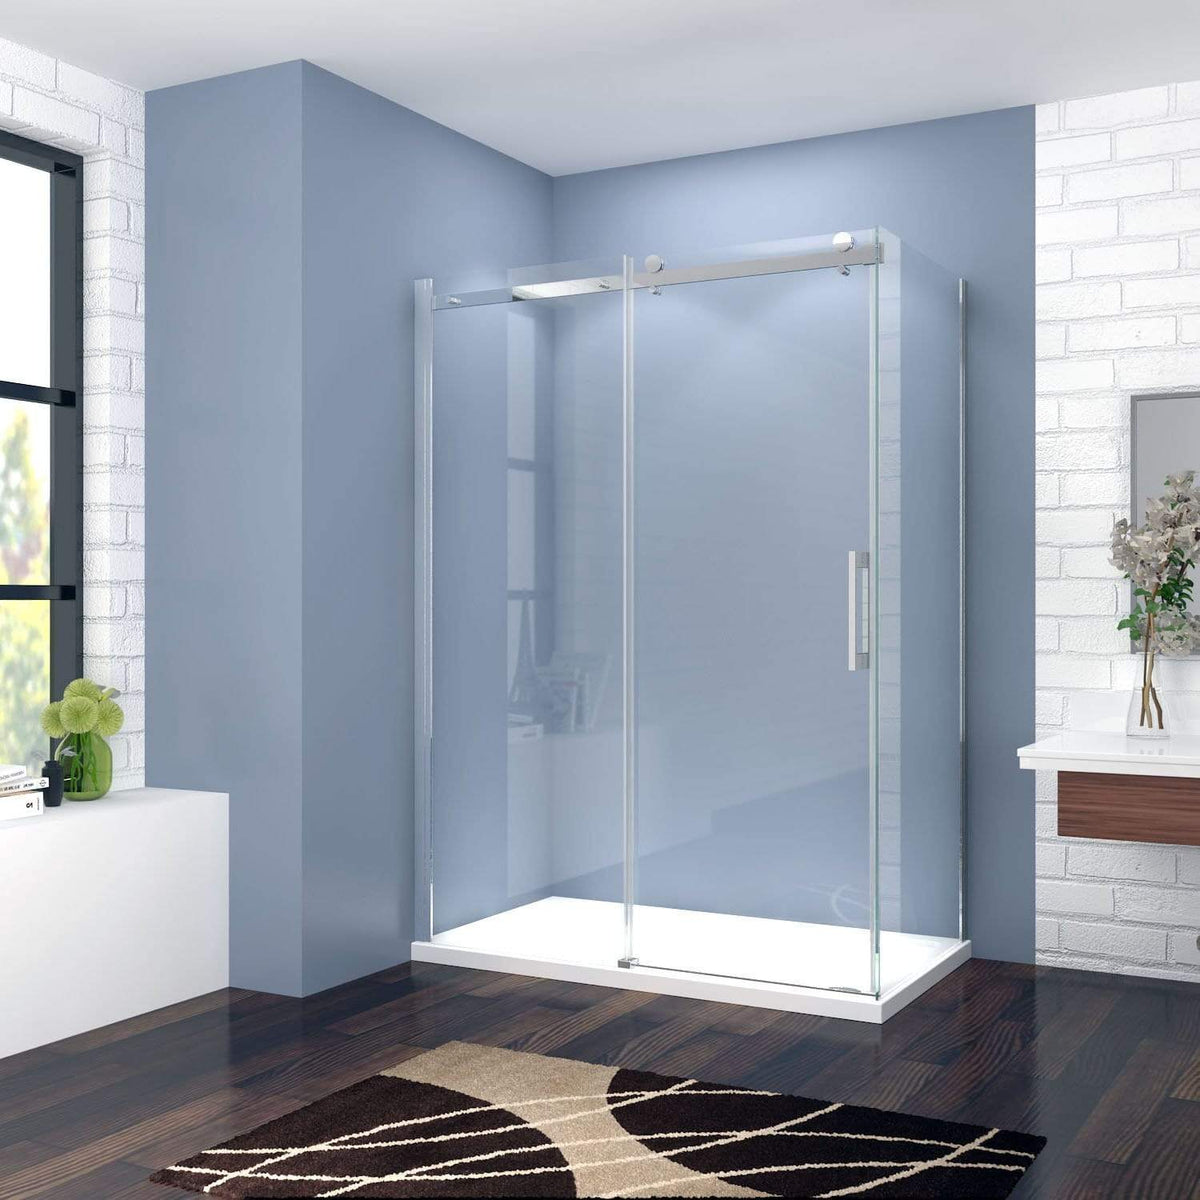 ELEGANT SHOWERS Frameless Sliding Shower Screens Luxury Bathroom - Elegantshowers